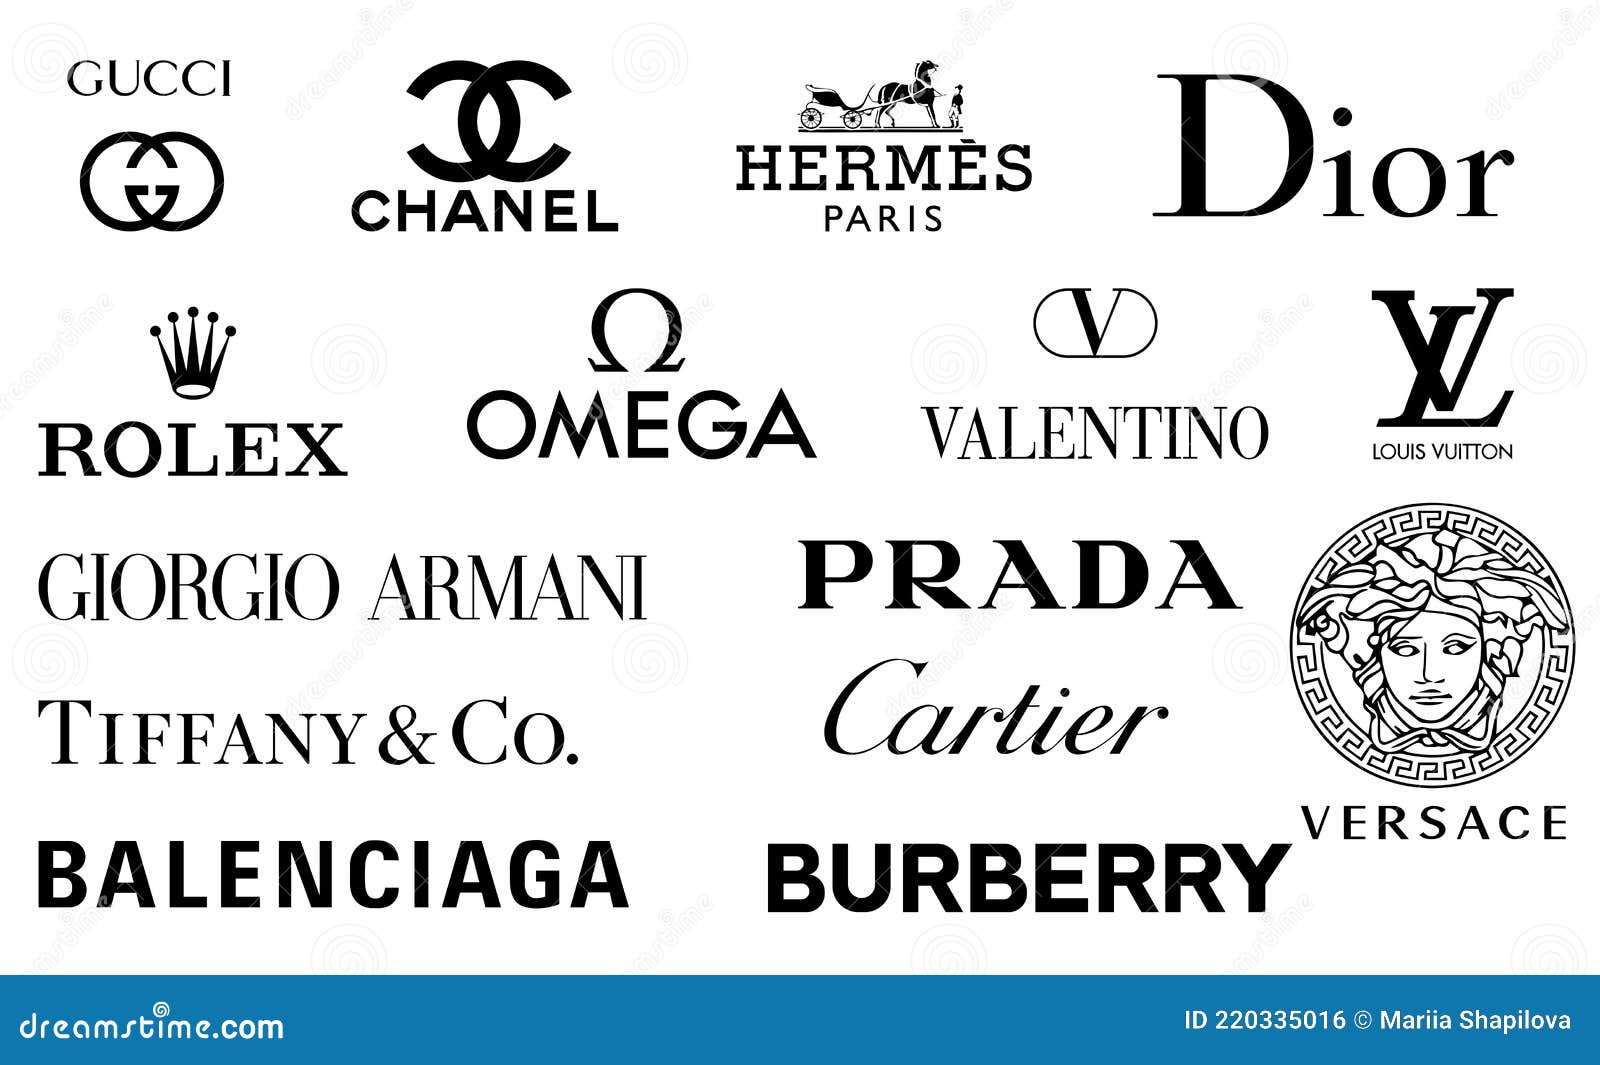 Design logo Fashion Design Gucci Dior Chanel Hermes Louis Vuitton